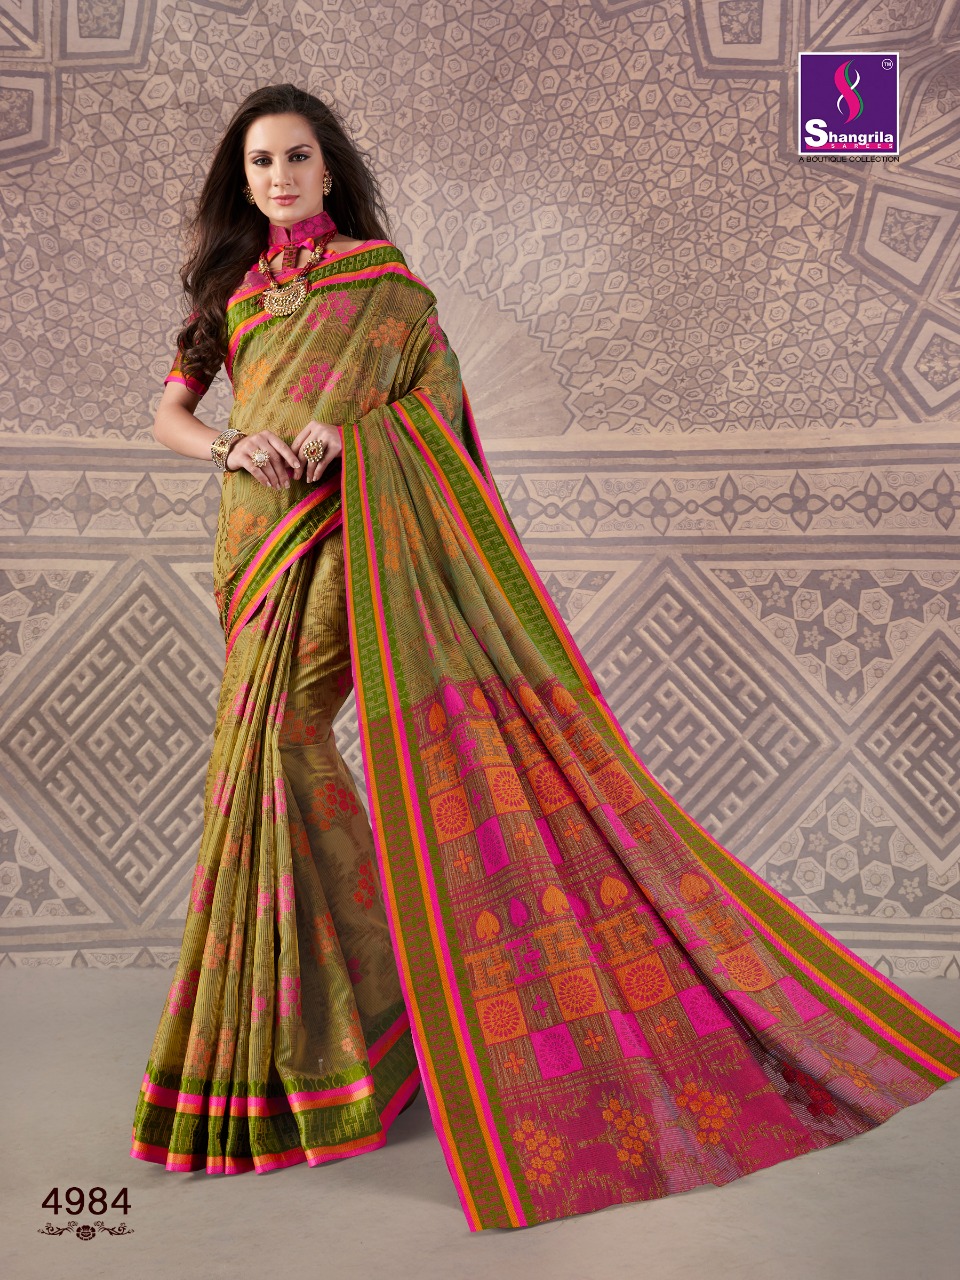 Shangrila mishka cotton printed designer sarees exporter